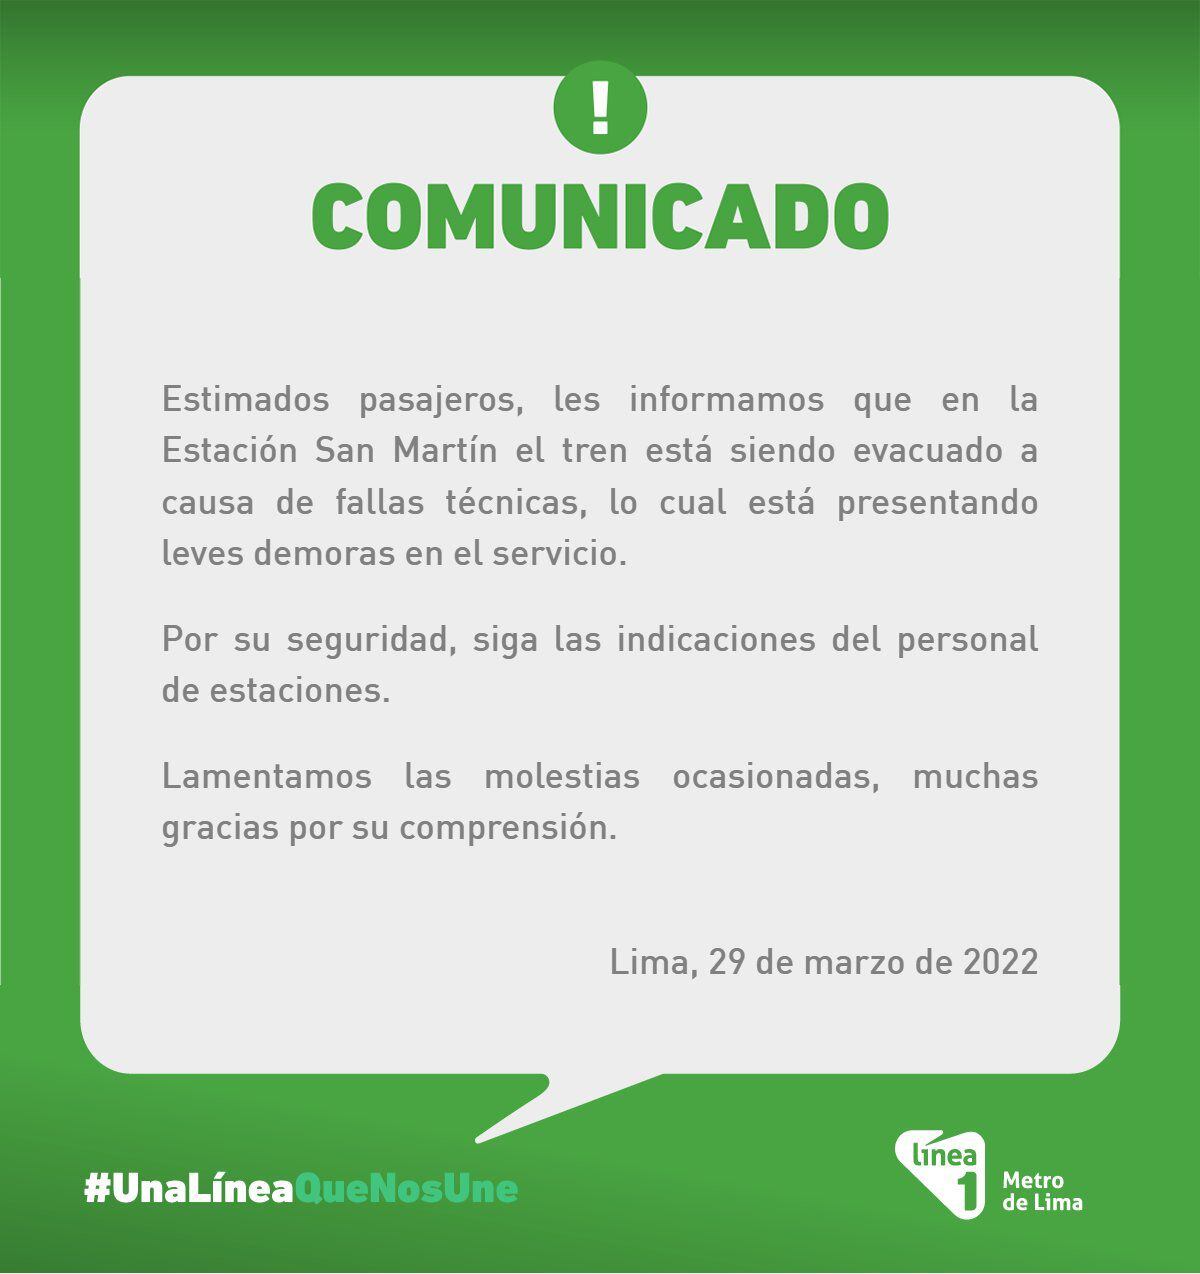 Comunicado de la Línea 1 Metro de Lima